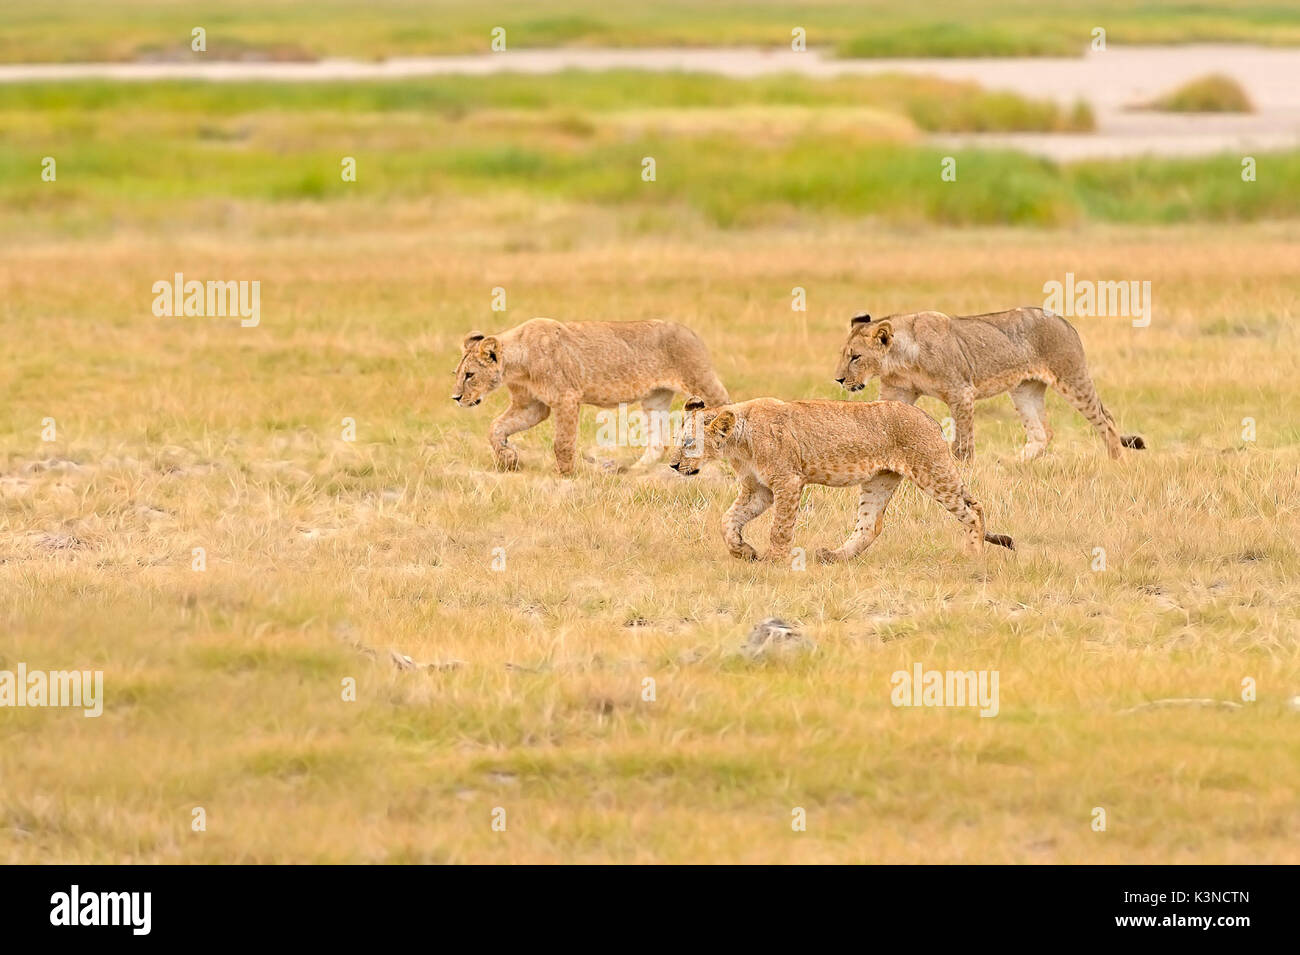 Amboseli Park,Kenya, Africa three lion cubs walking together Stock Photo